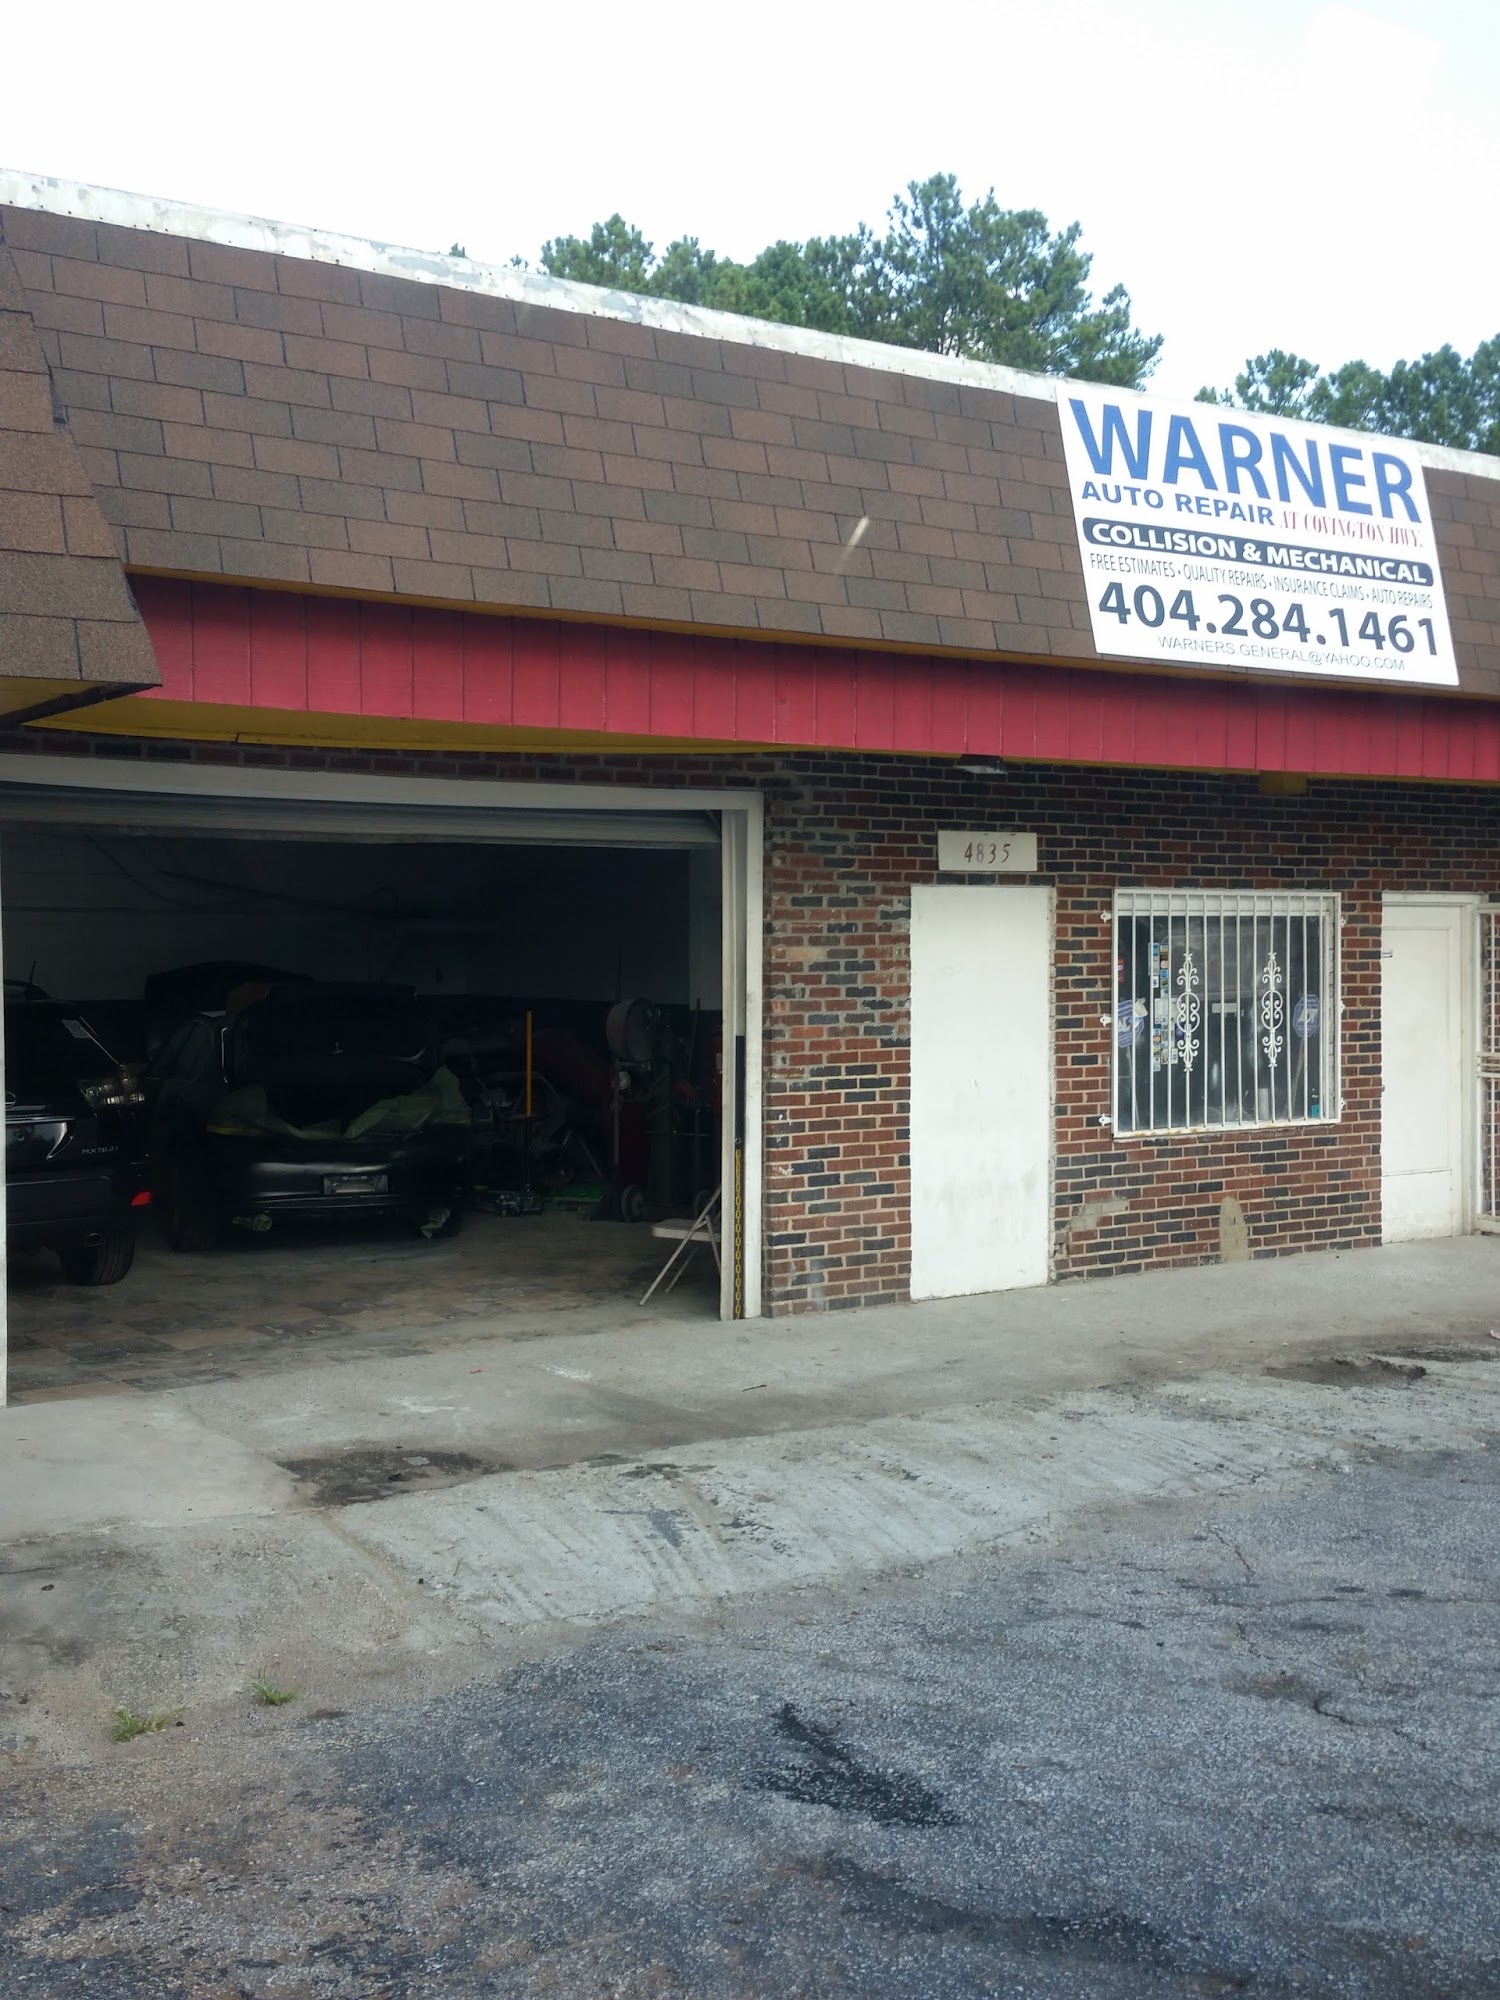 Warner's General Auto Services